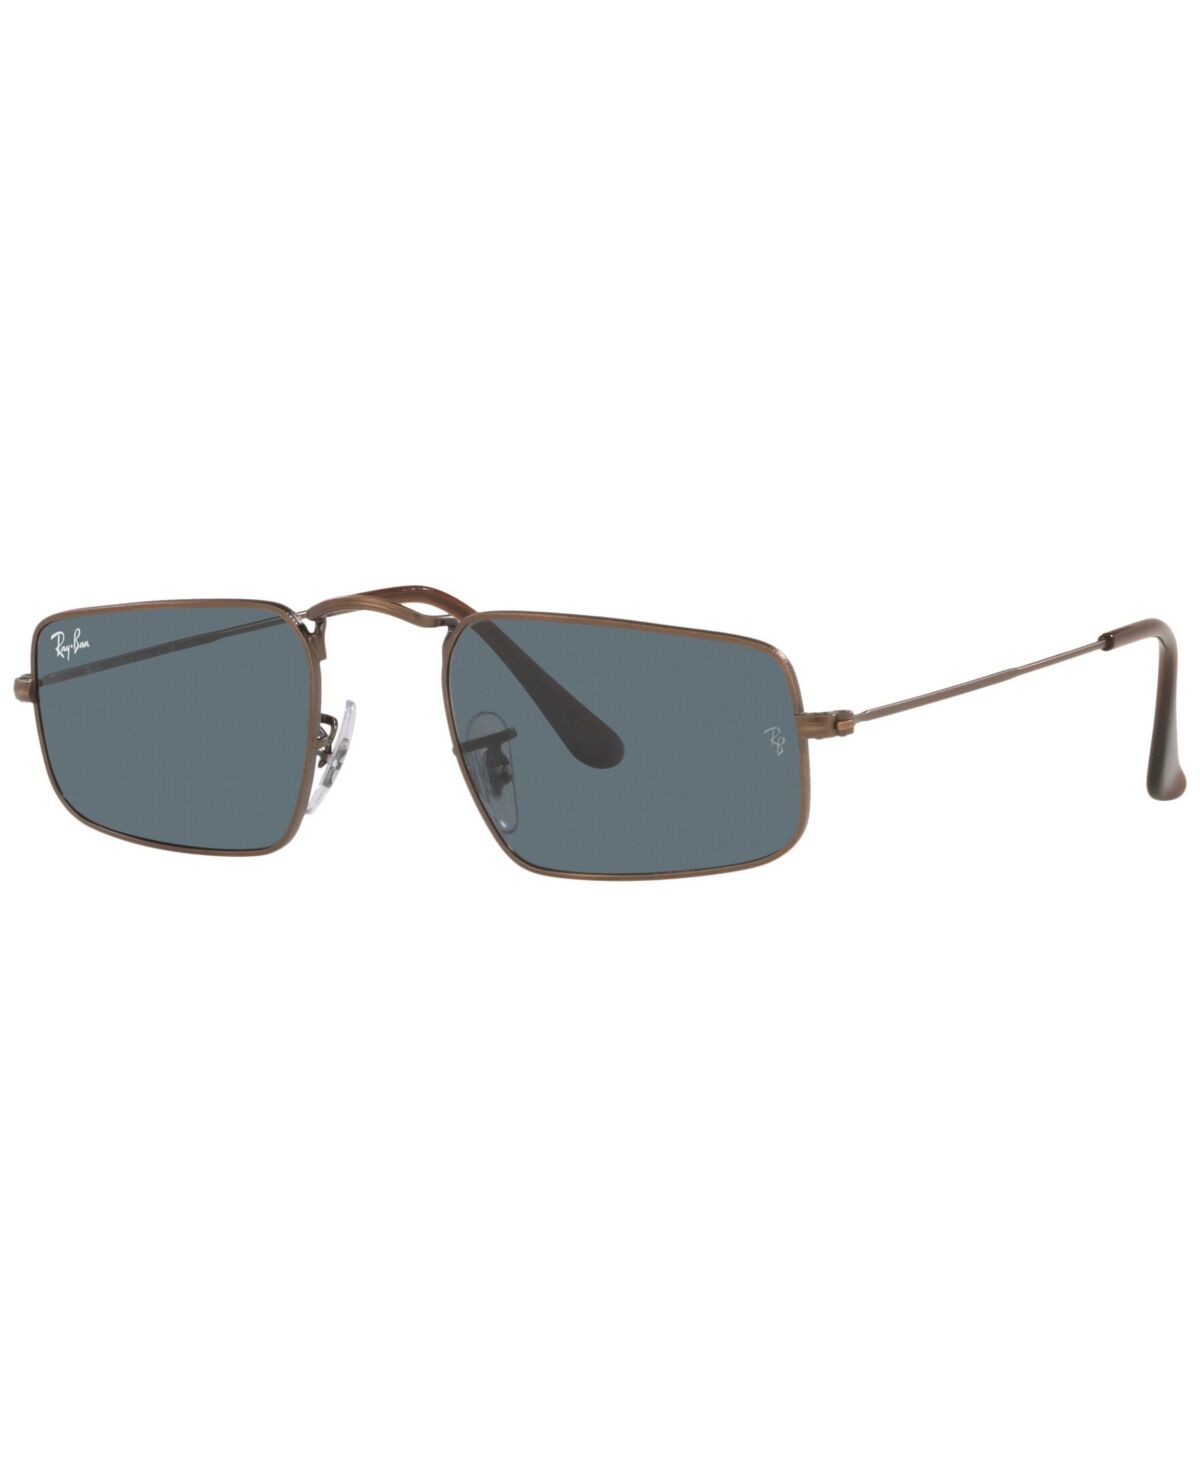 Ray-Ban Unisex Sunglasses, RB3957 - Antique Copper